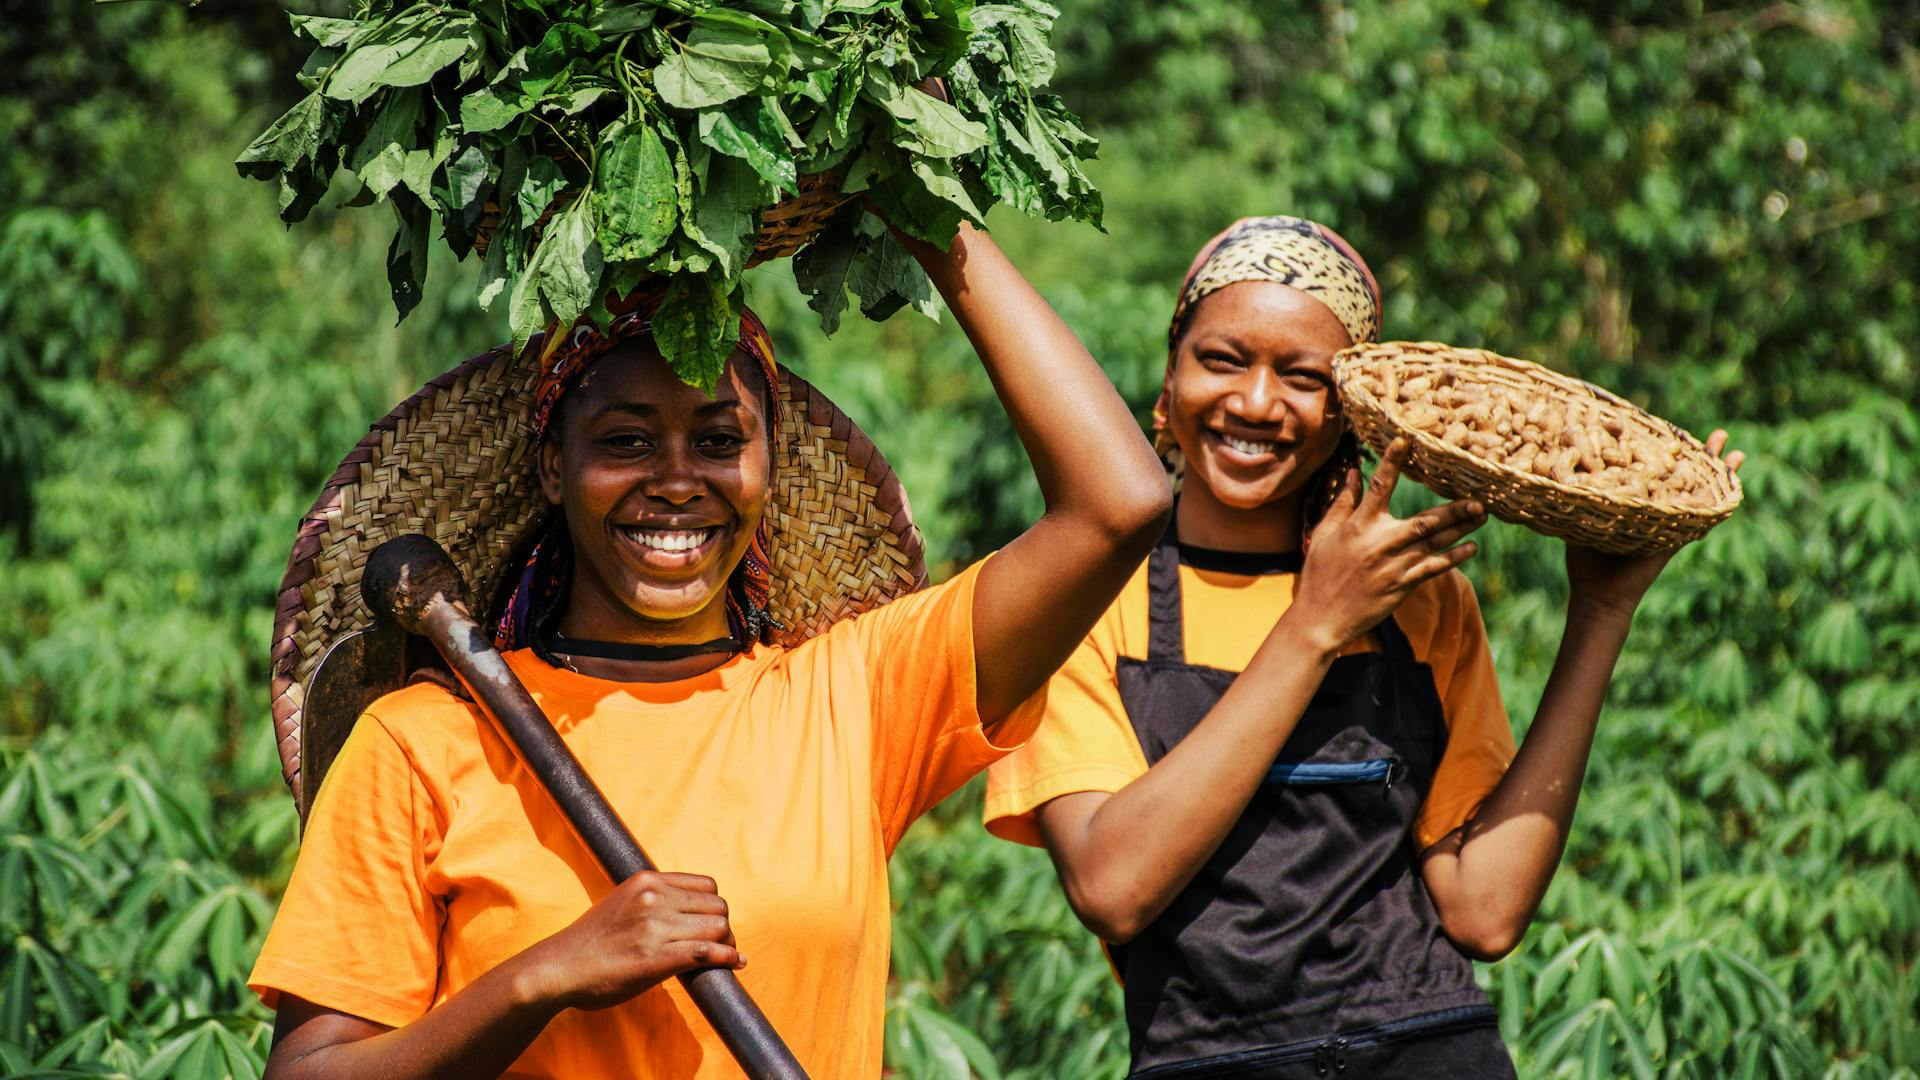 Shades of Orange - Two Women from Africa Wearing Orange